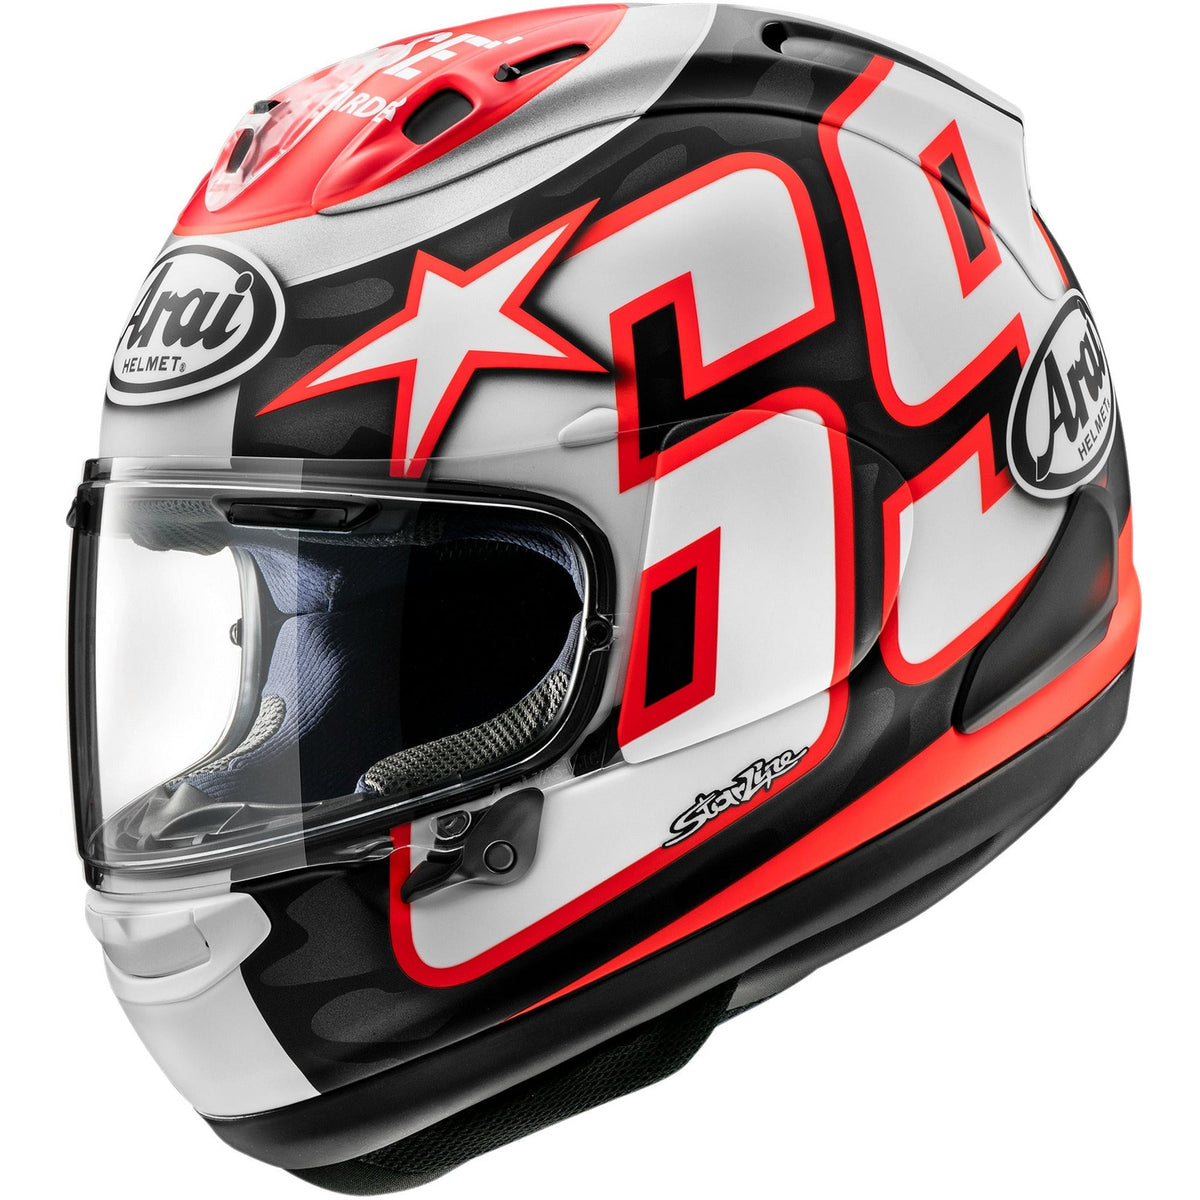 Corsair-X Helmet (Nicky Reset)